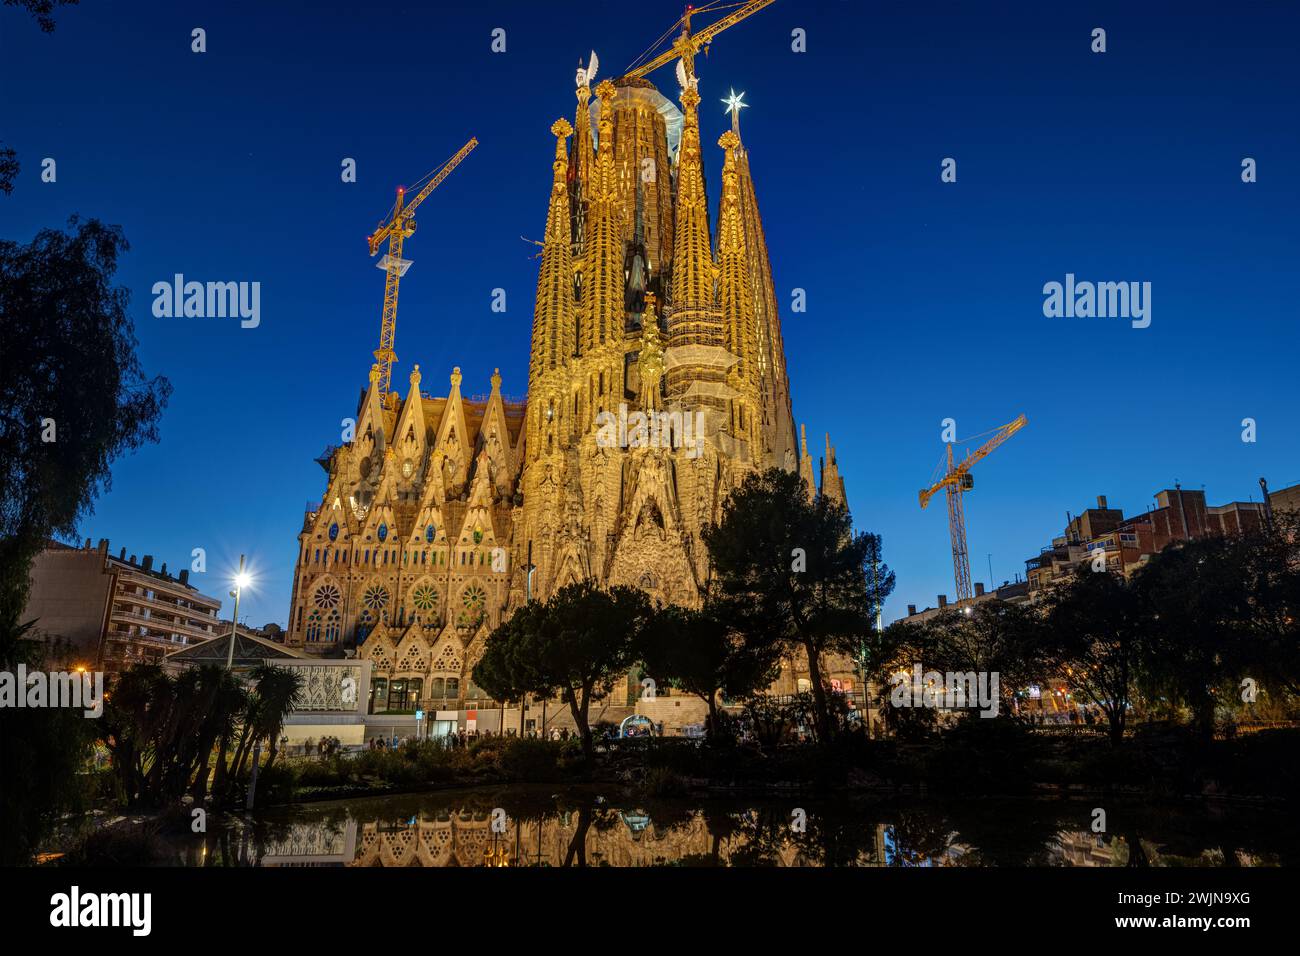 The Nativity Facade of the famous Sagrada Familia church in Barcelona at night Stock Photo